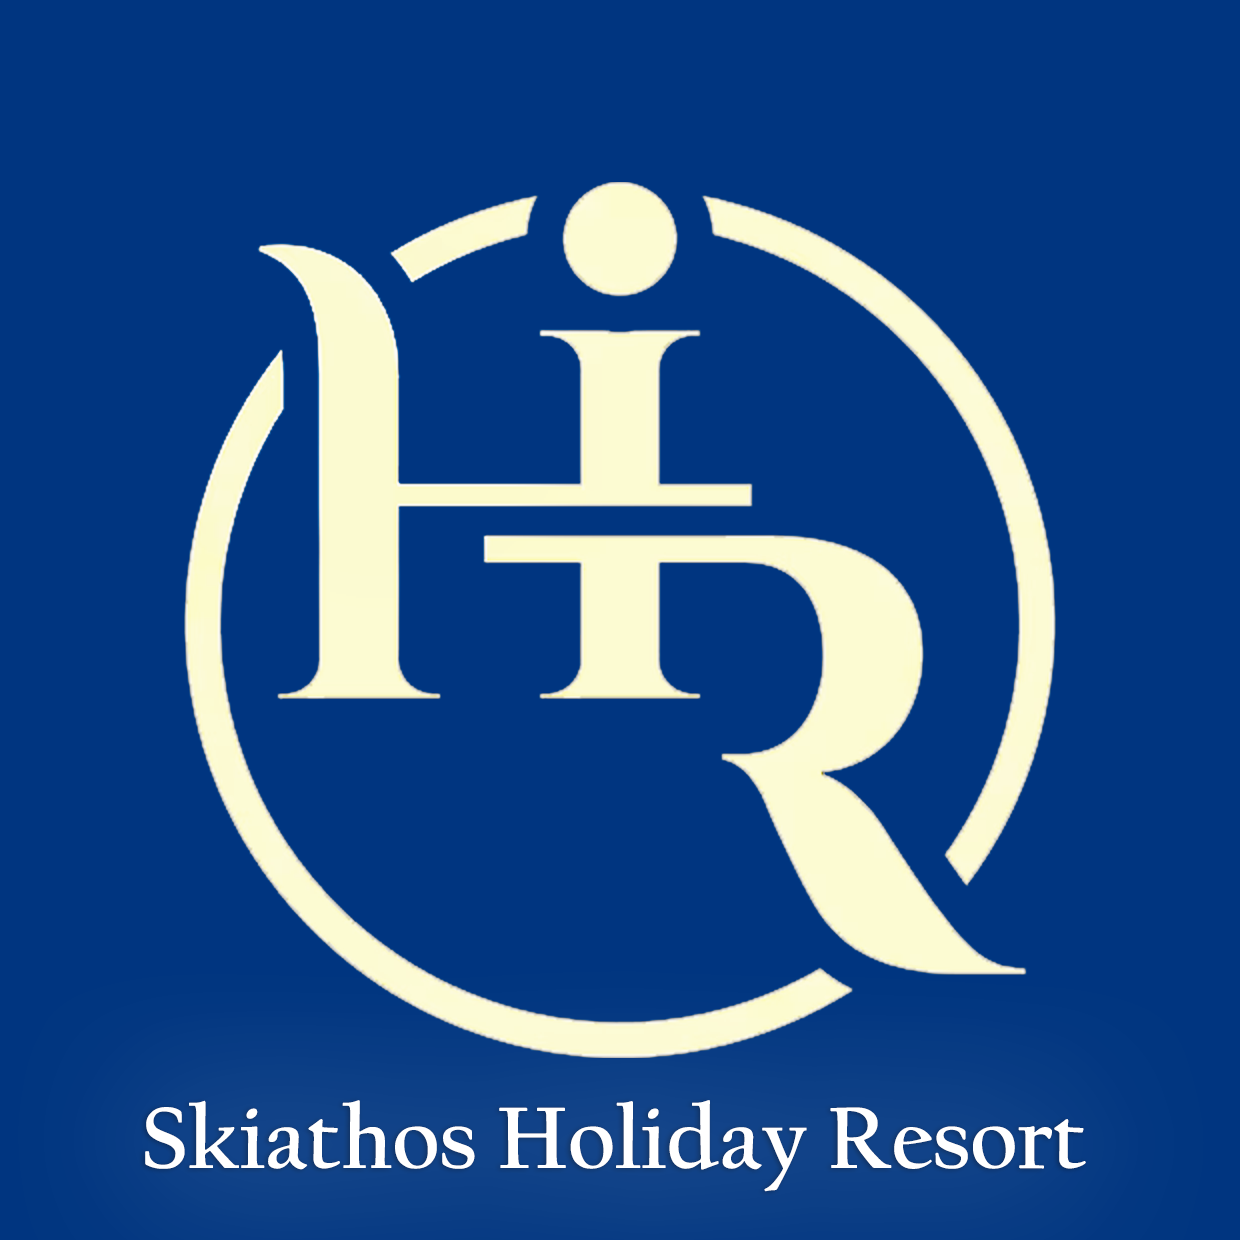 Skiathos Holiday Resort | Free maps & travel guides - Skiathos Holiday Resort